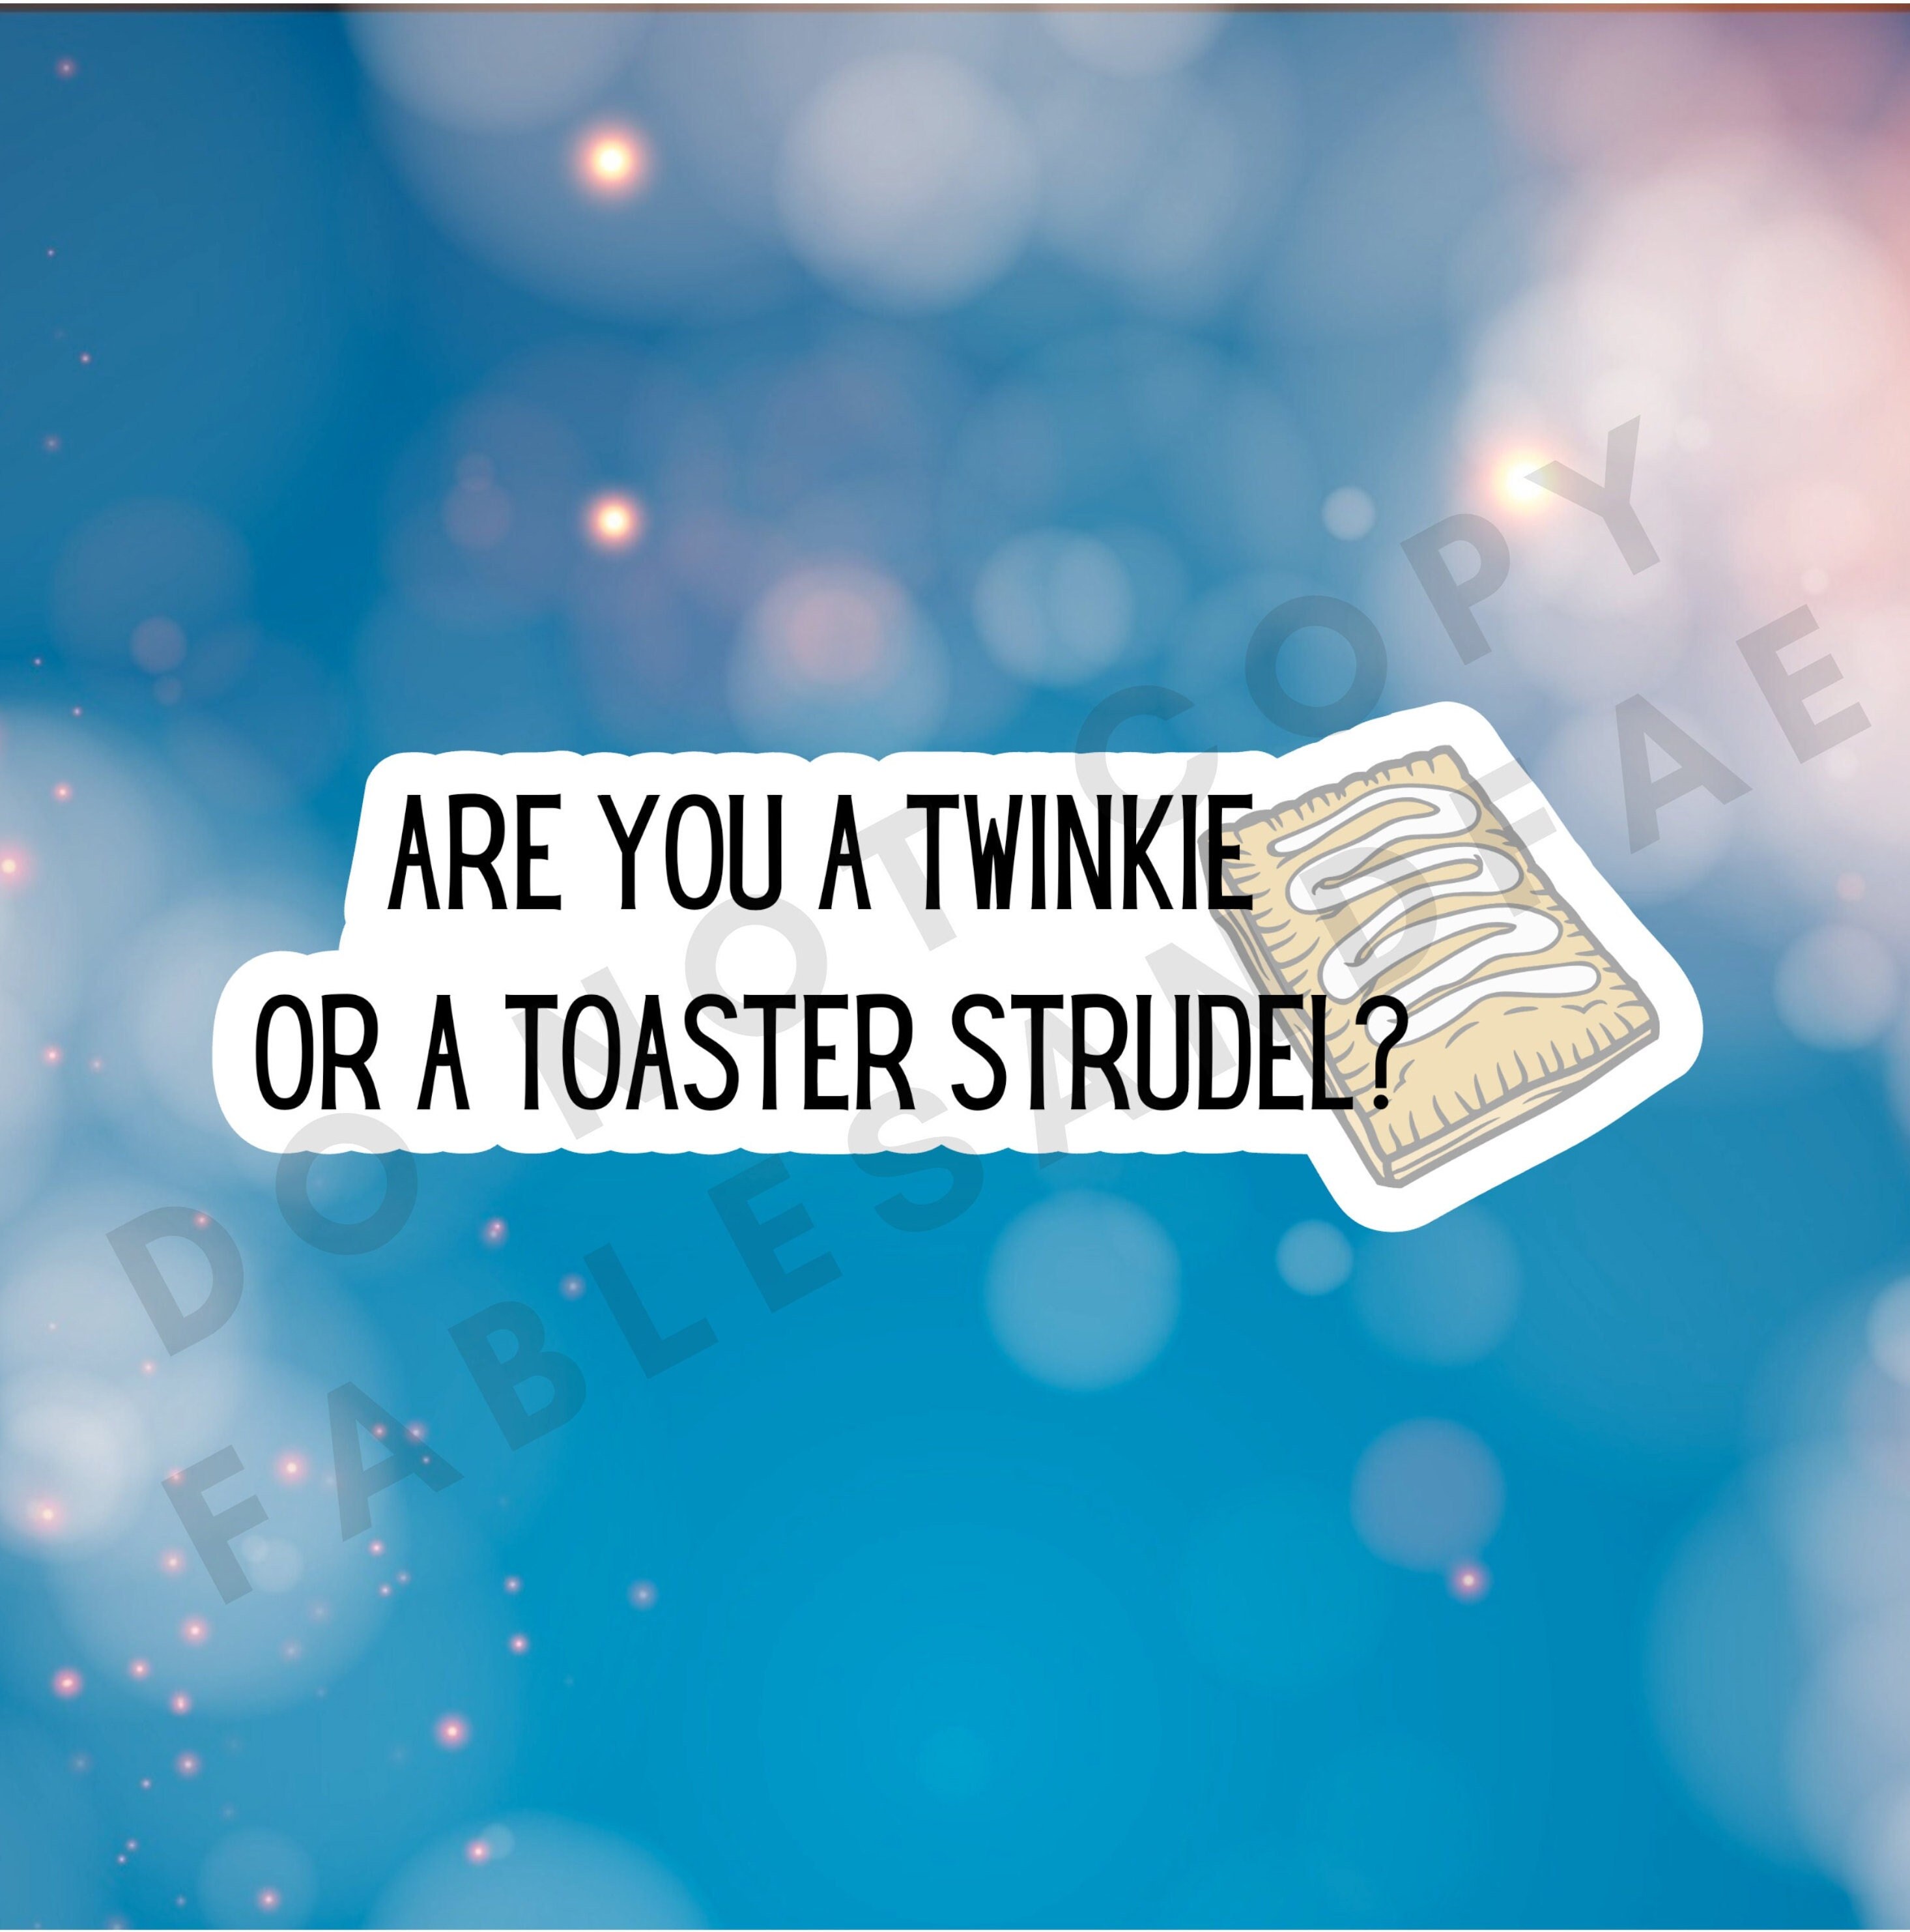 Toaster strudel or twinkie